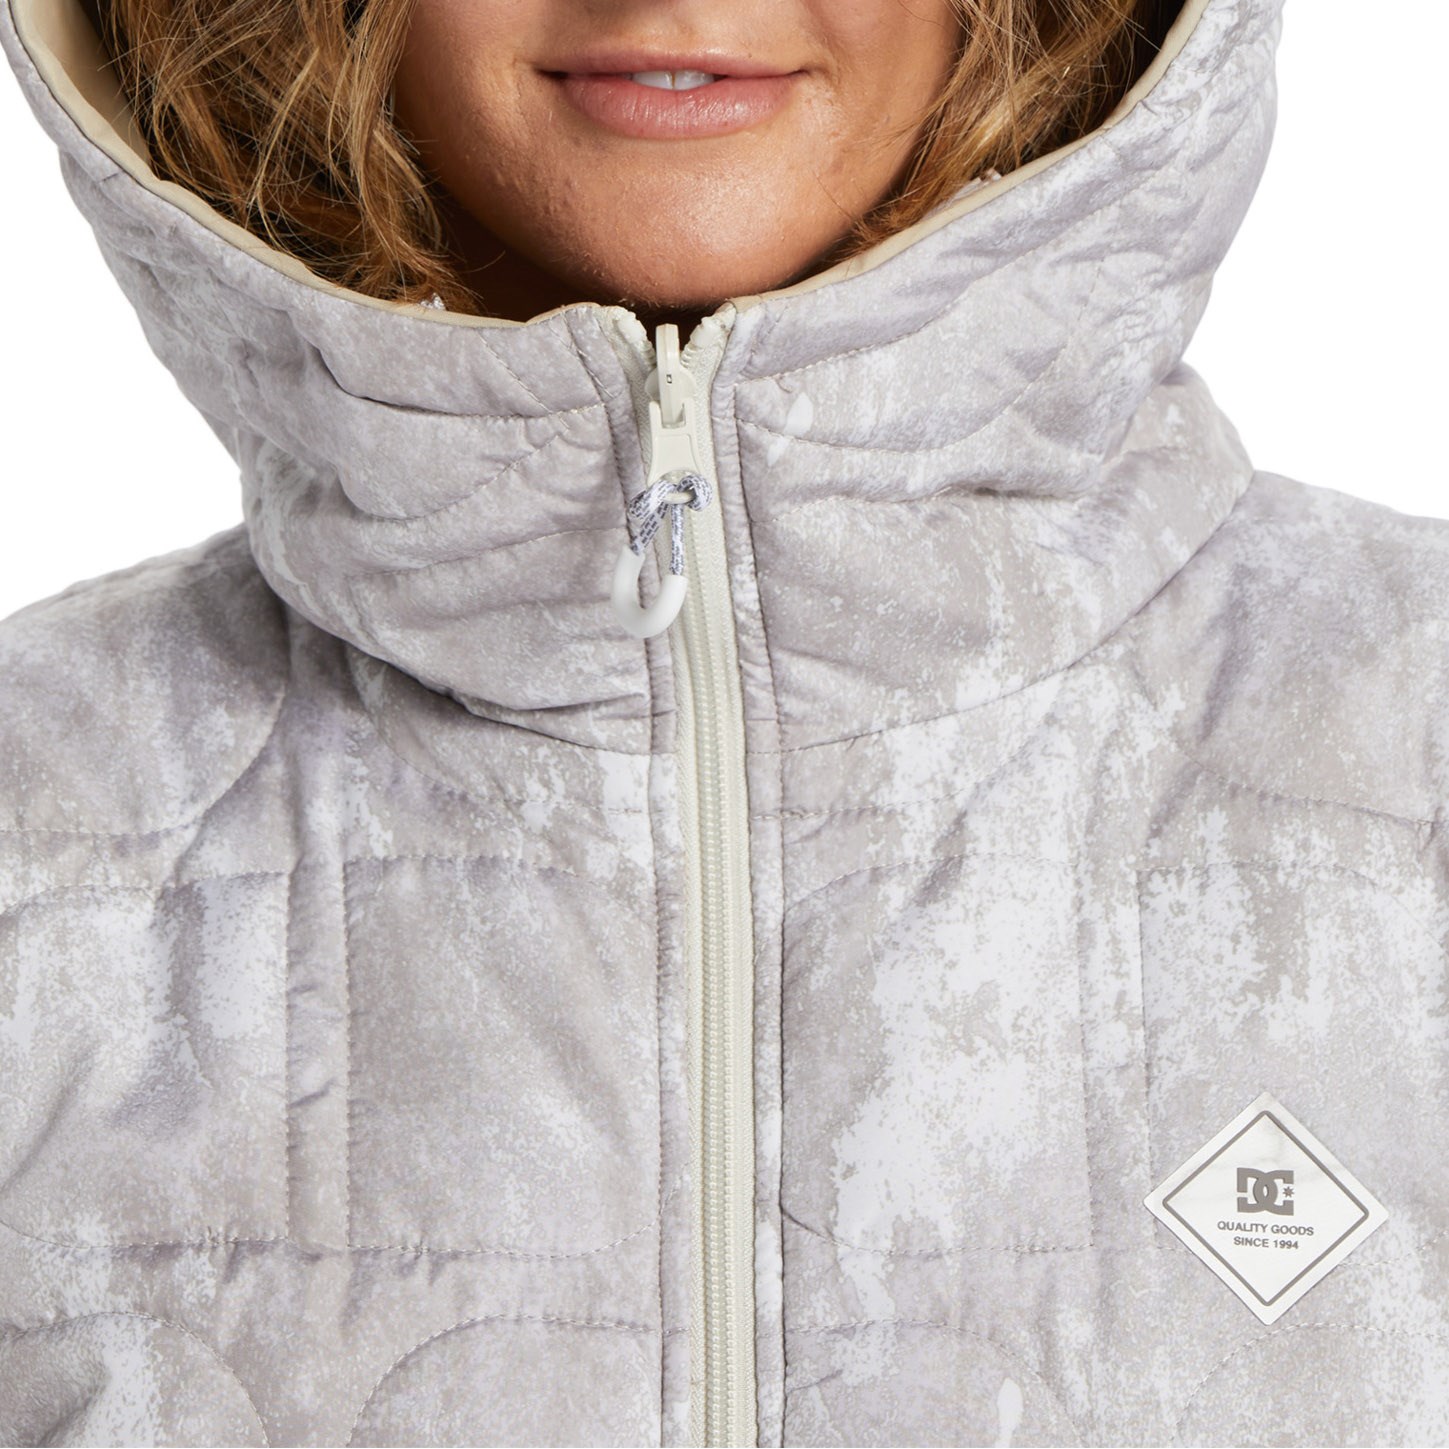 Nexus - Technical Reversible Anorak Snow Jacket for Women